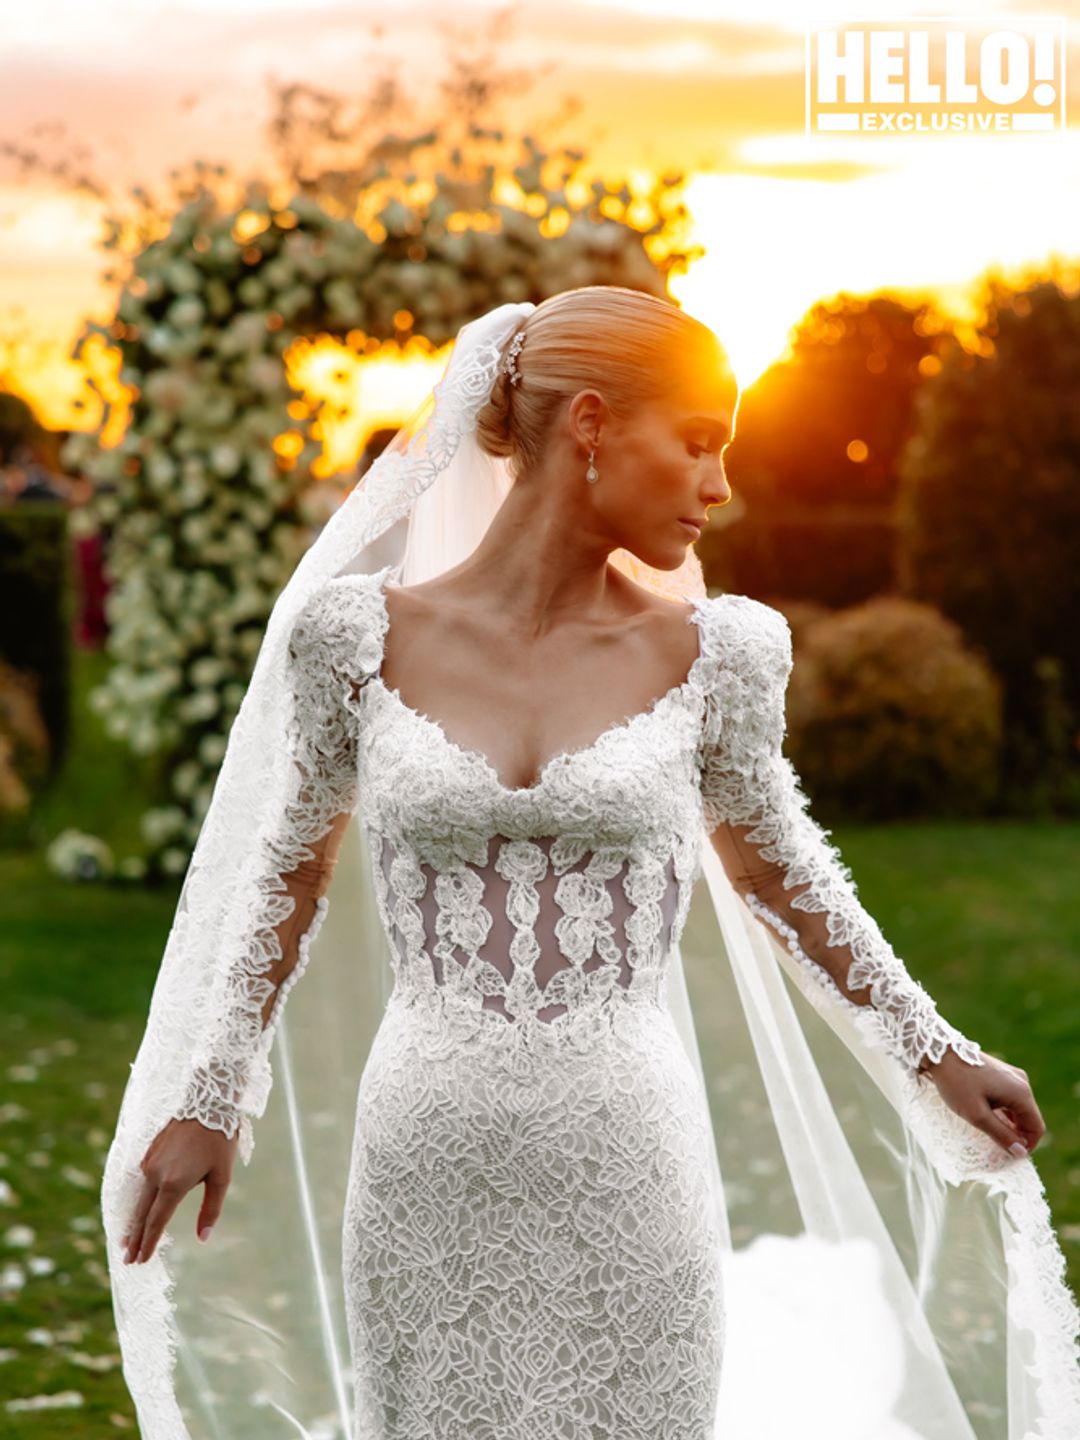 Amelia Spencer's wedding dress at sunset